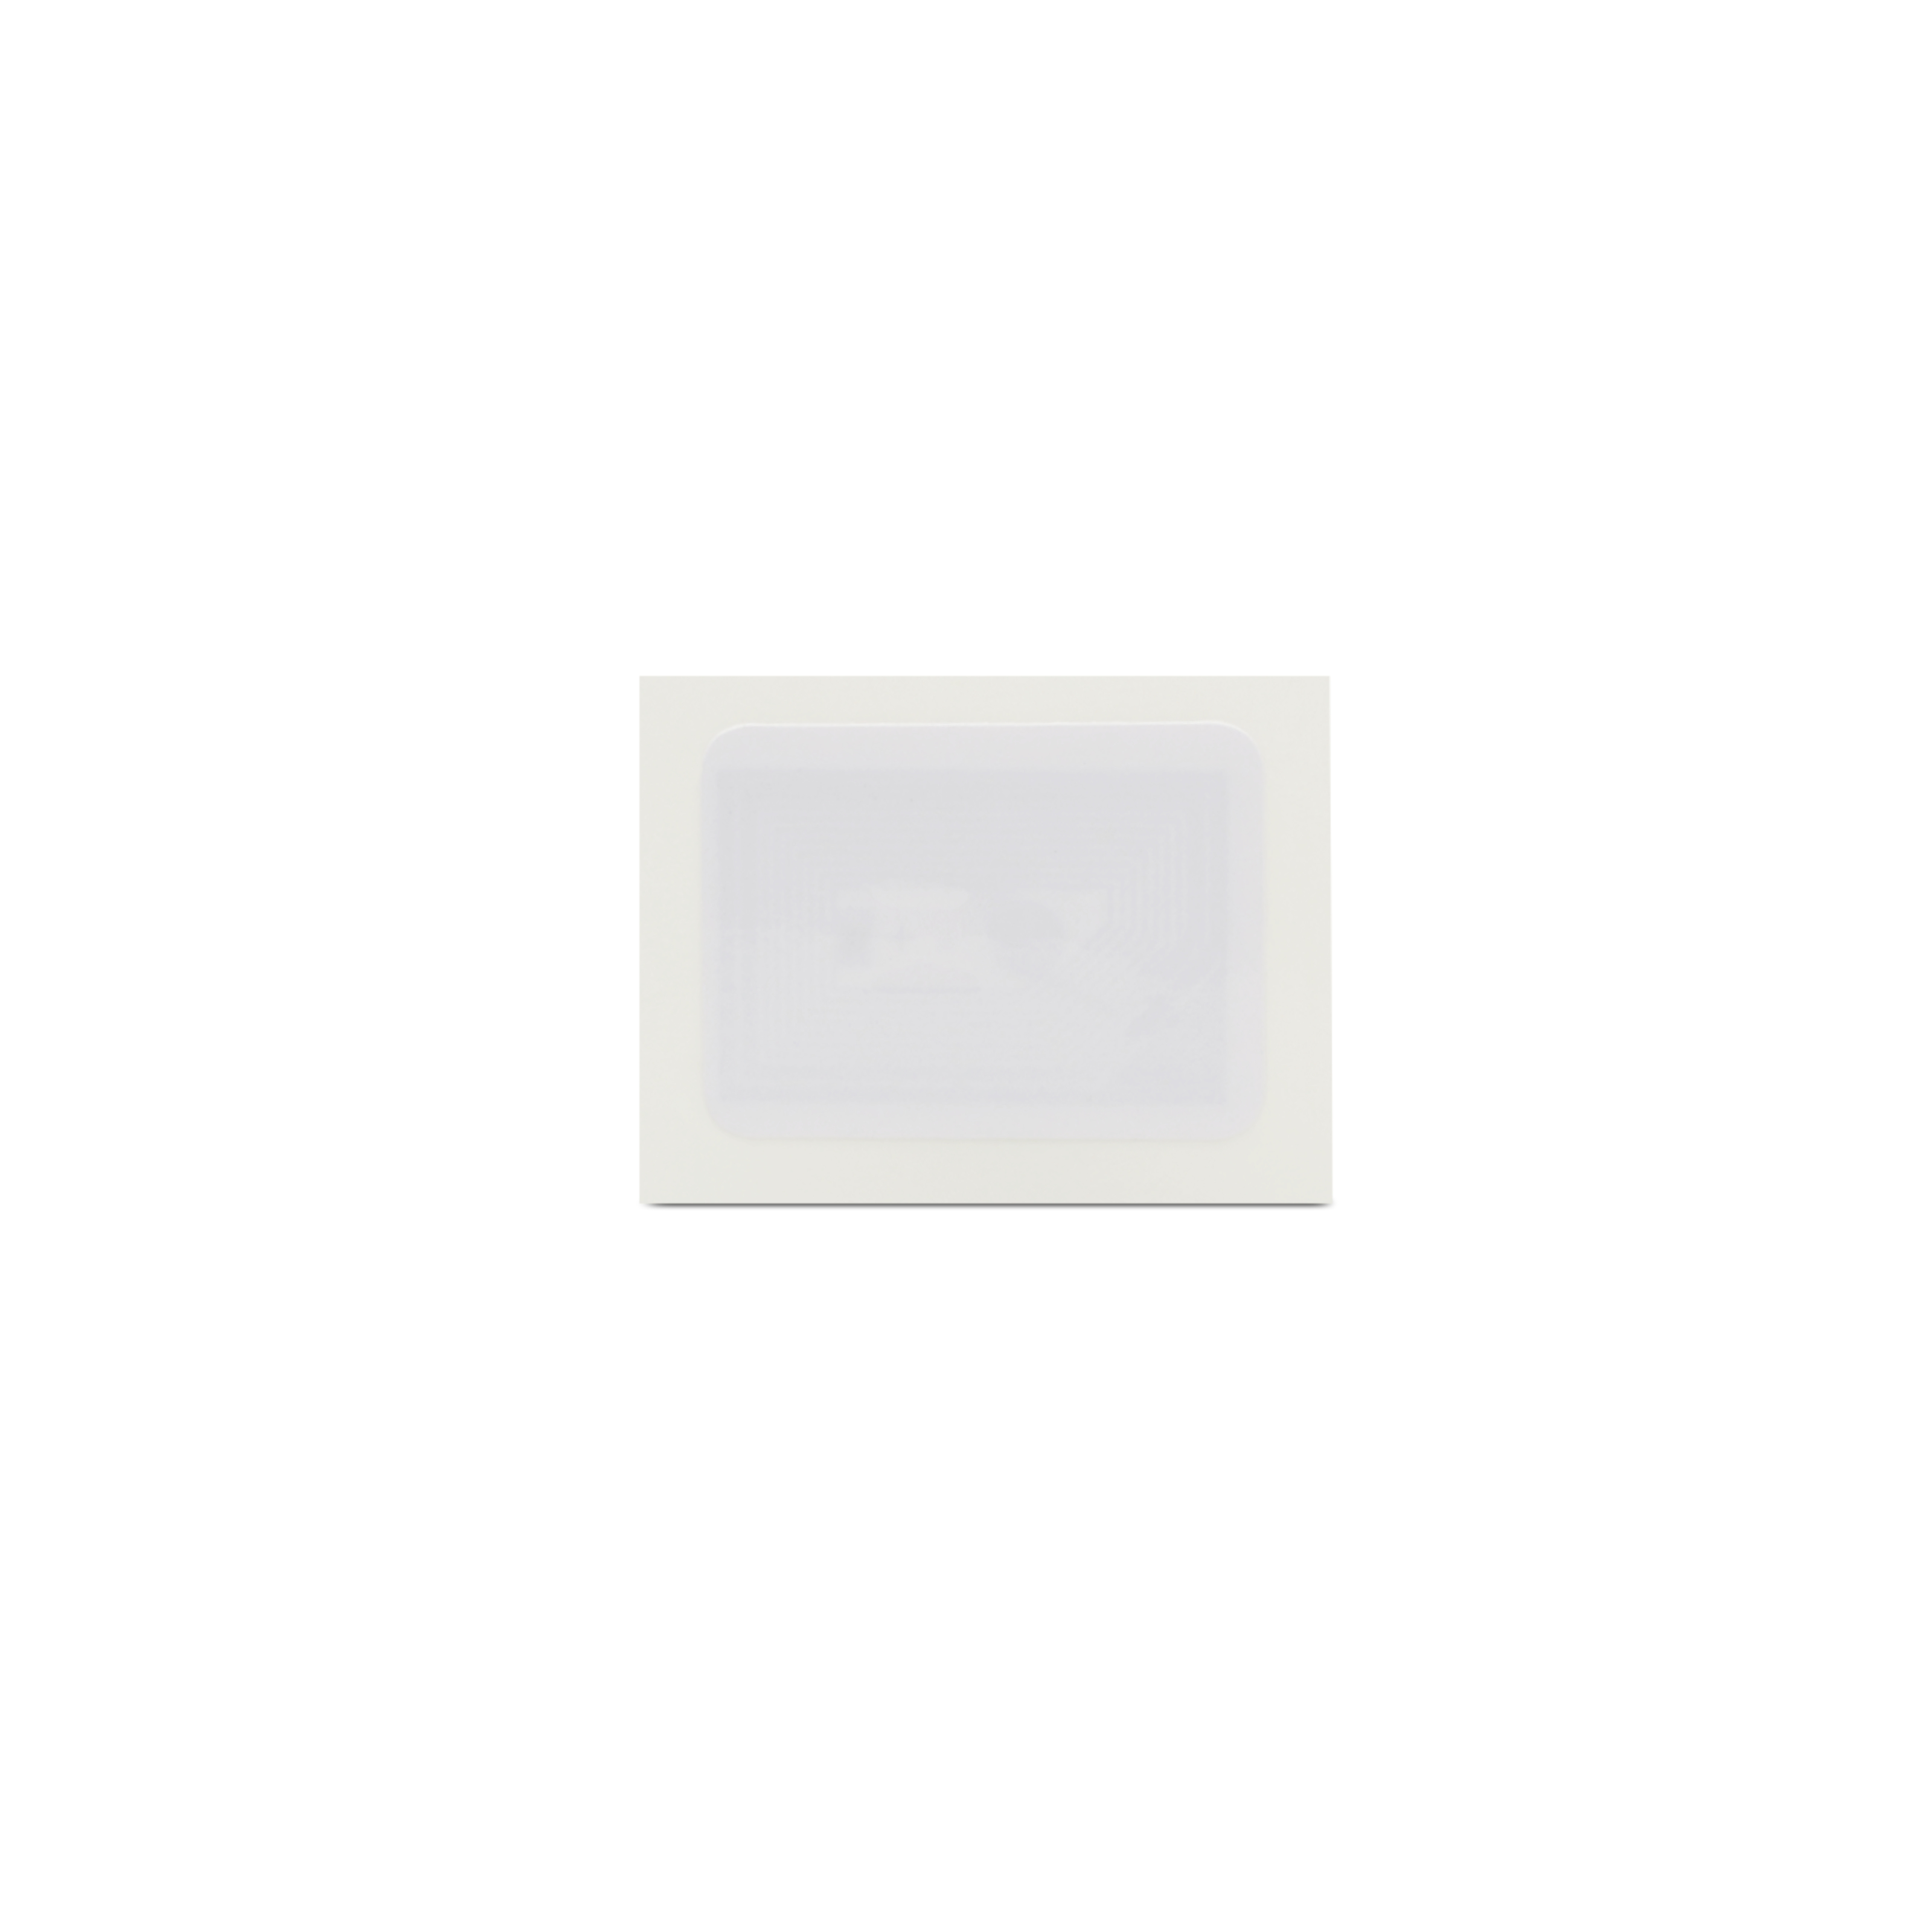 NFC Sticker PET - 20 x 15 mm - NTAG216 - 924 Byte - weiß